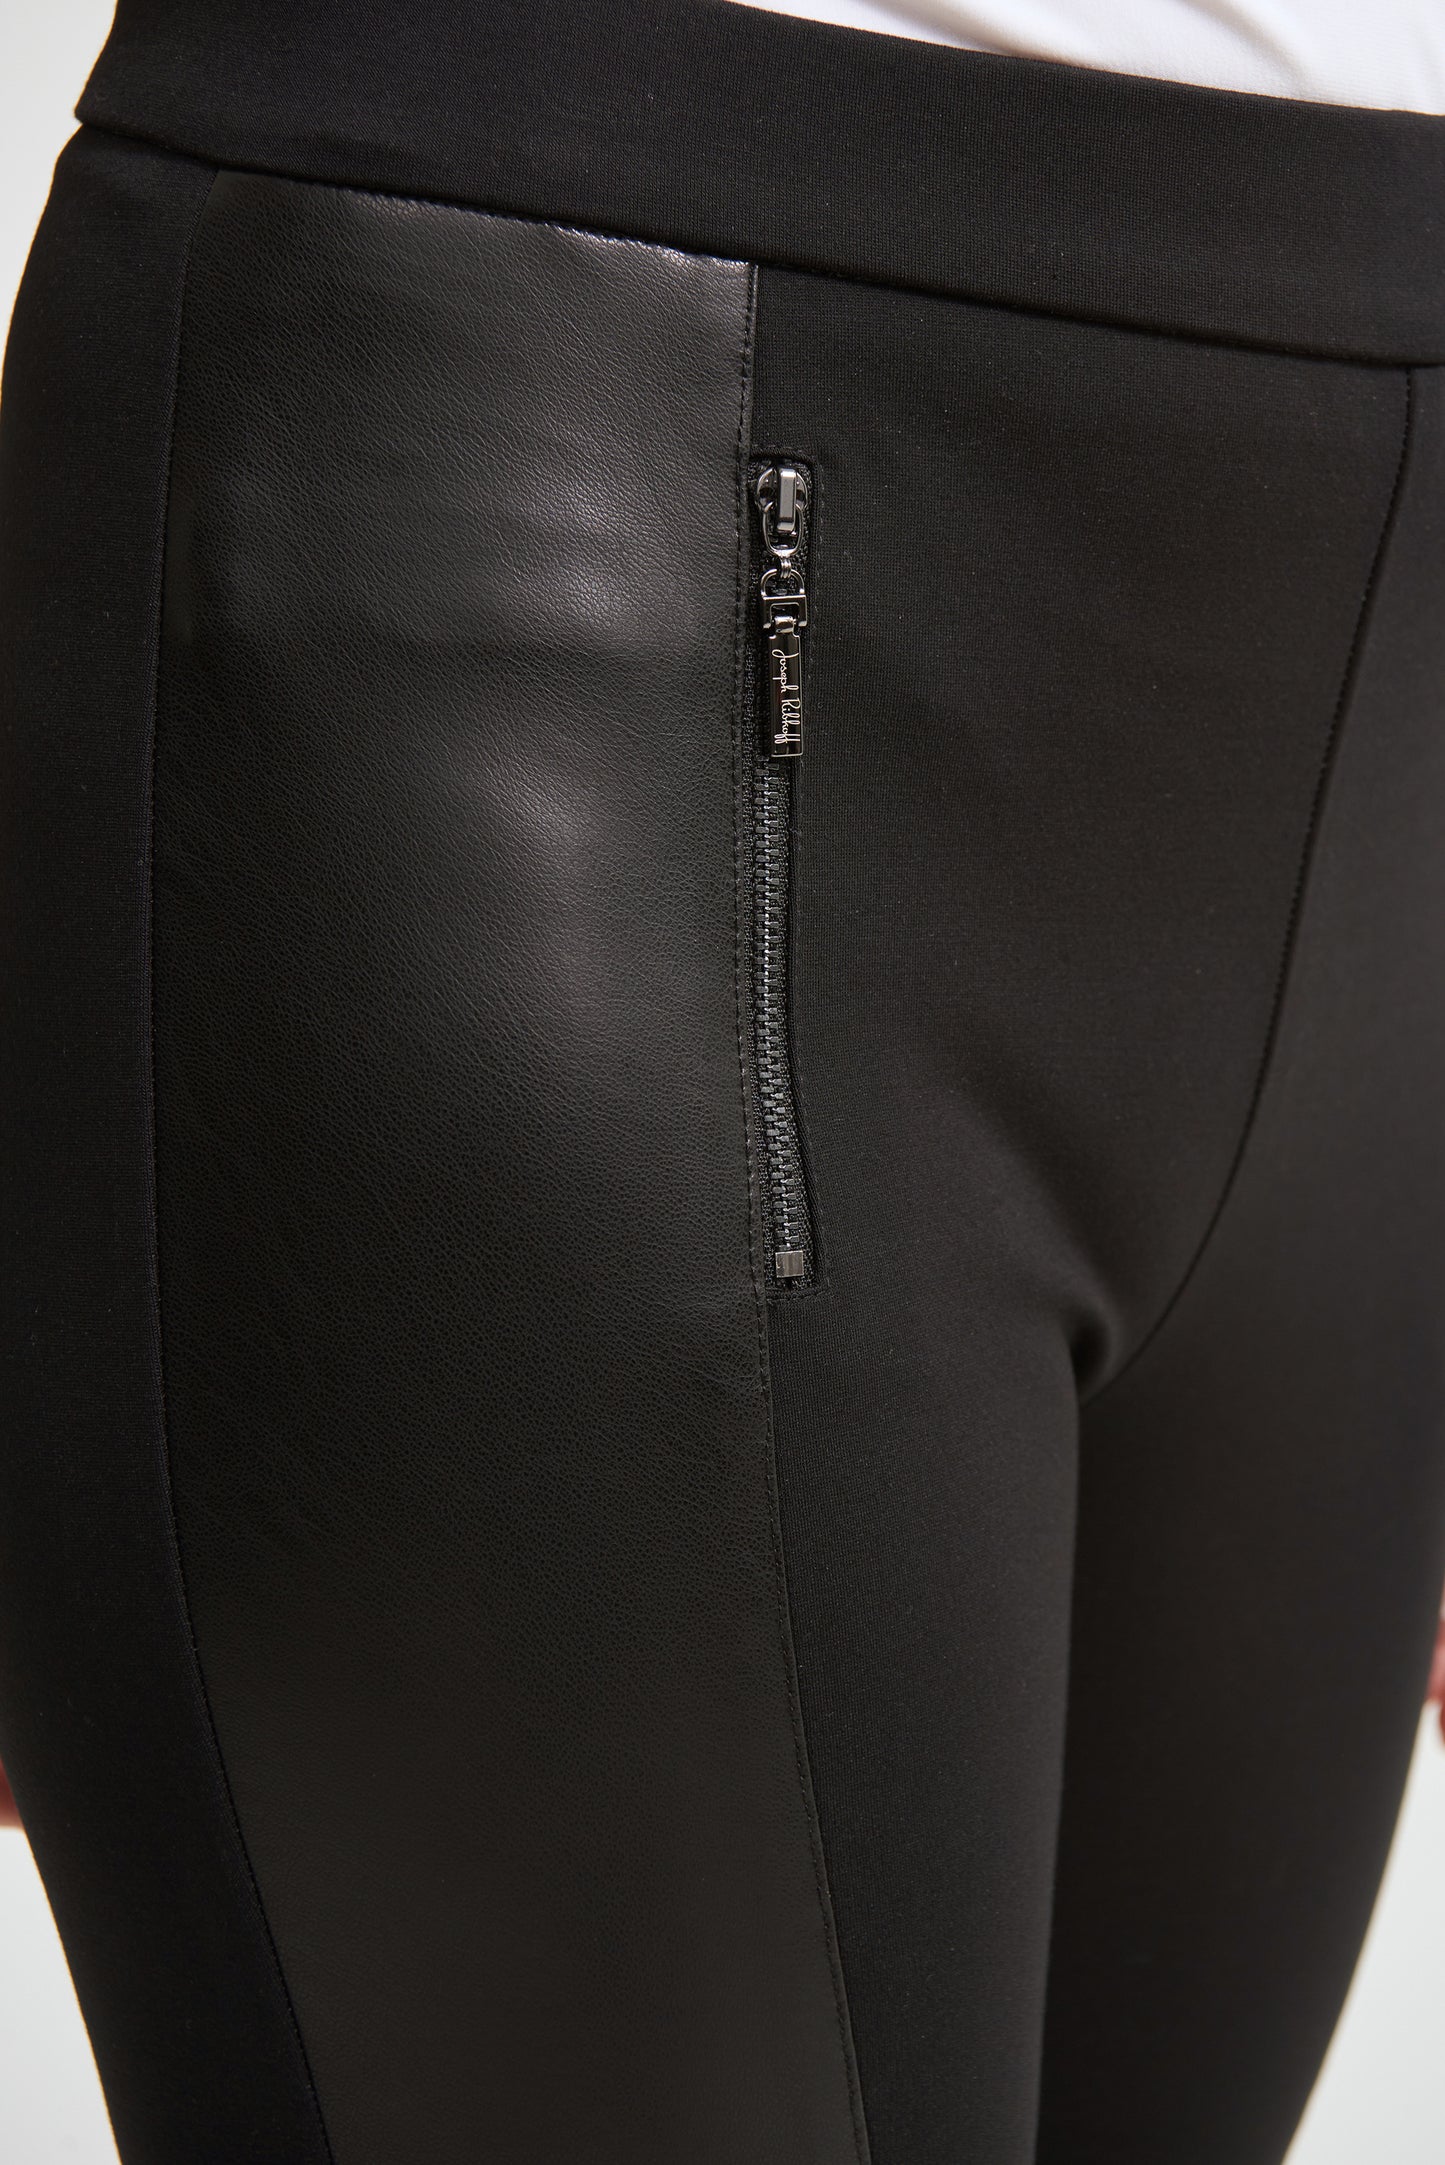 Joseph Ribkoff - Faux Leather Pants - Style 213385